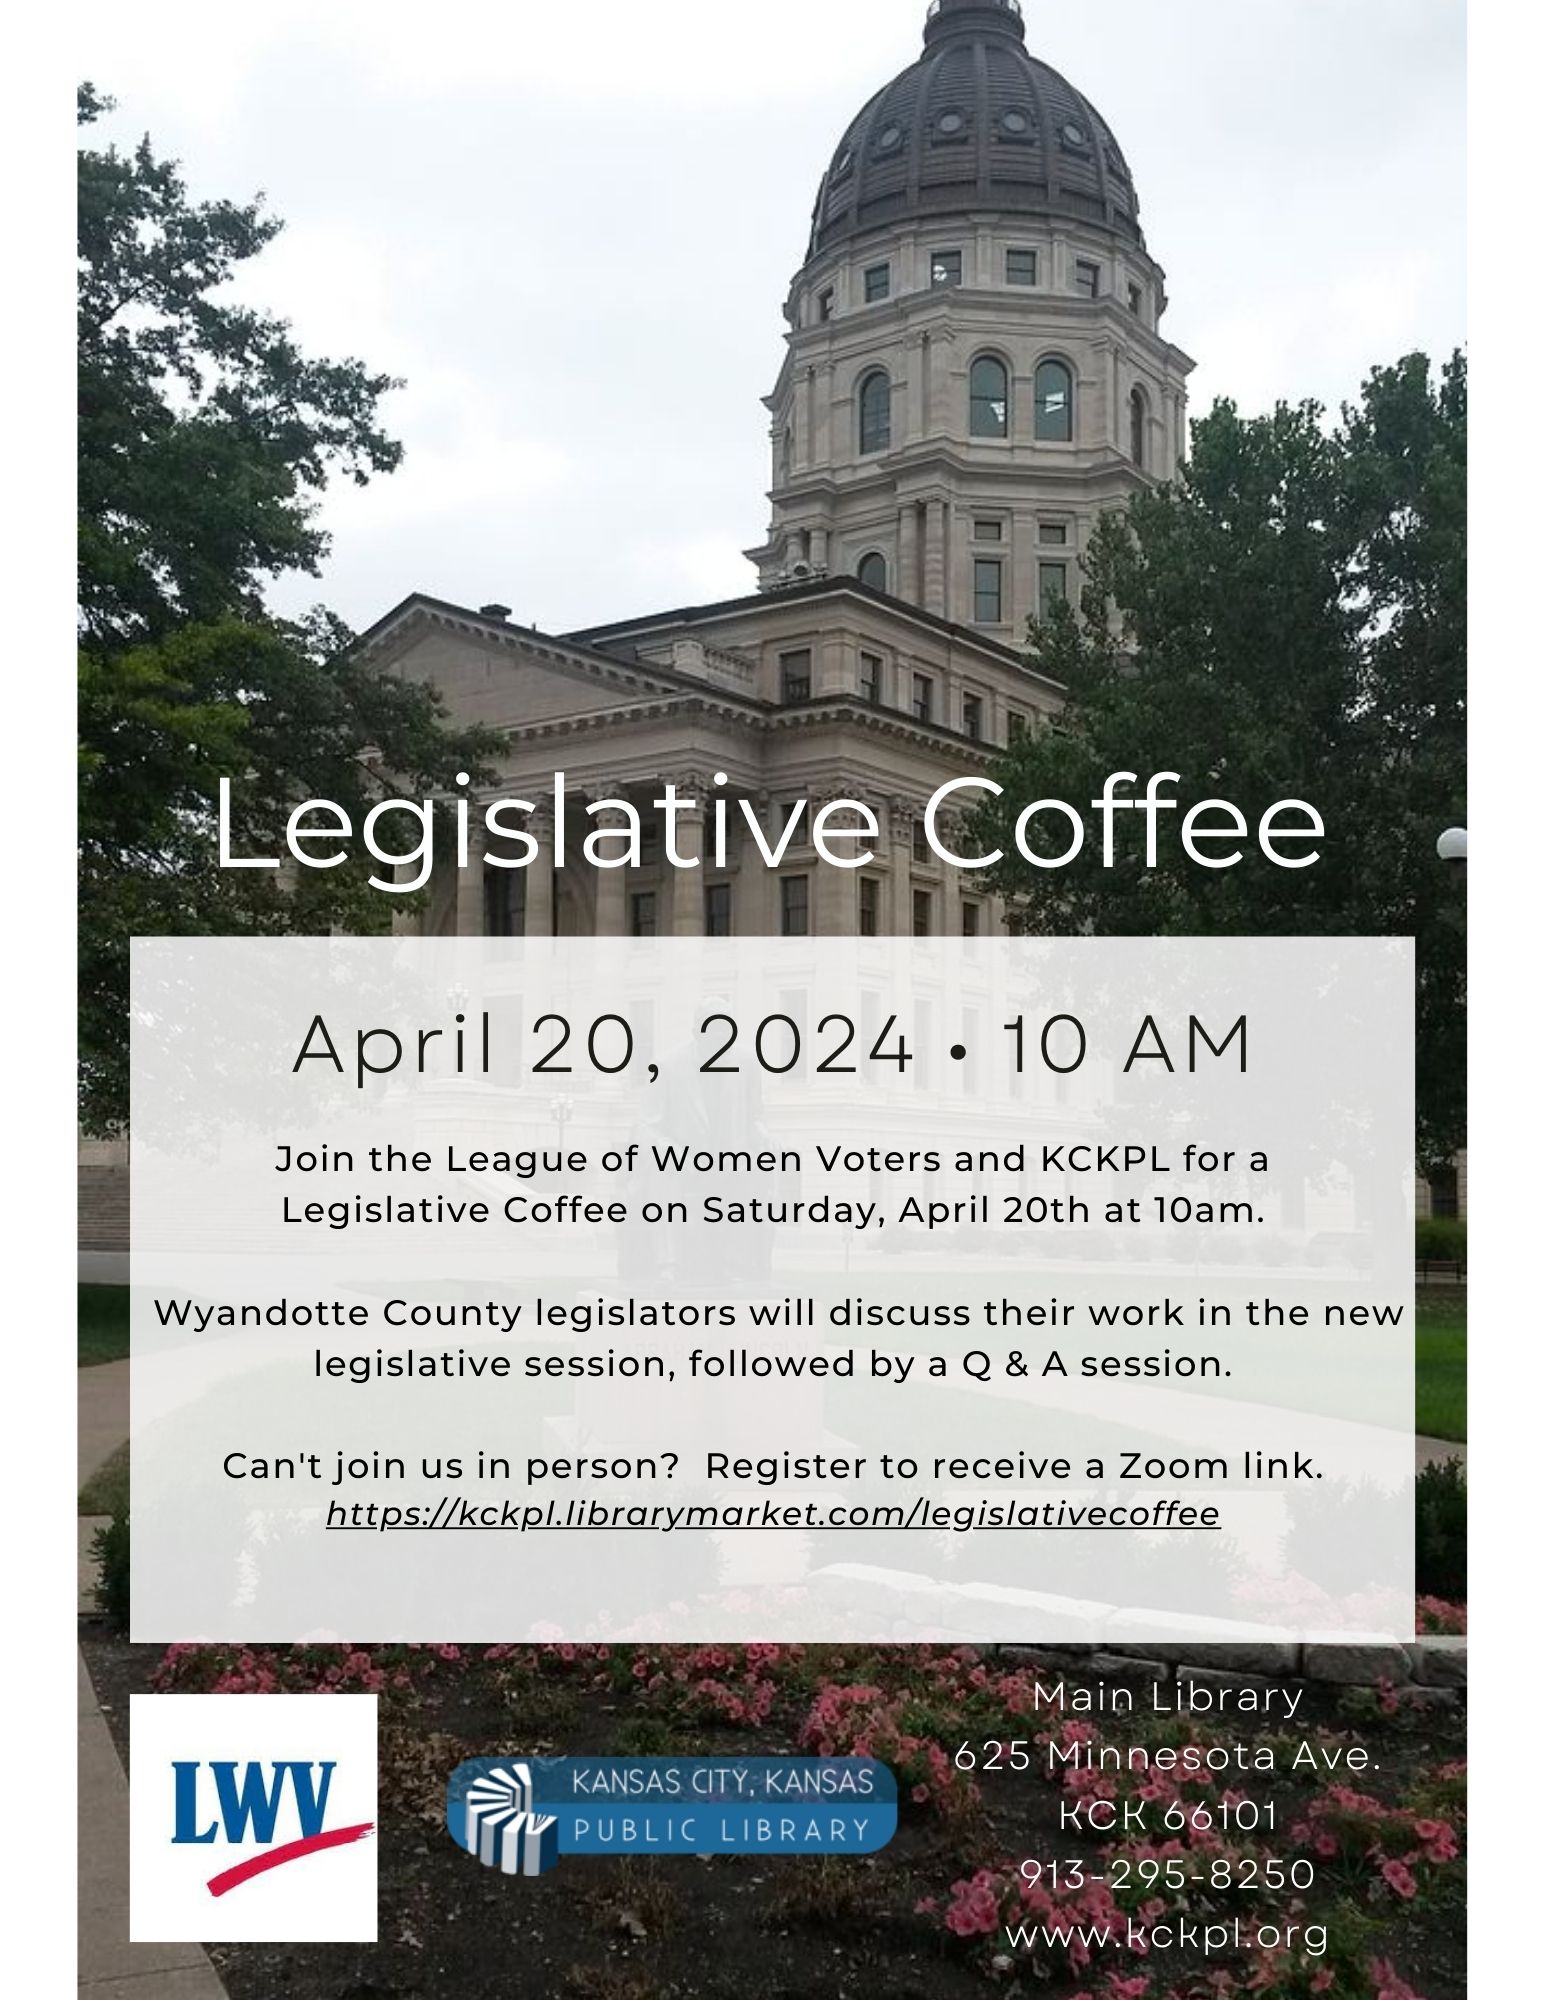 Legislative Coffee April 20th at 10am Main Library